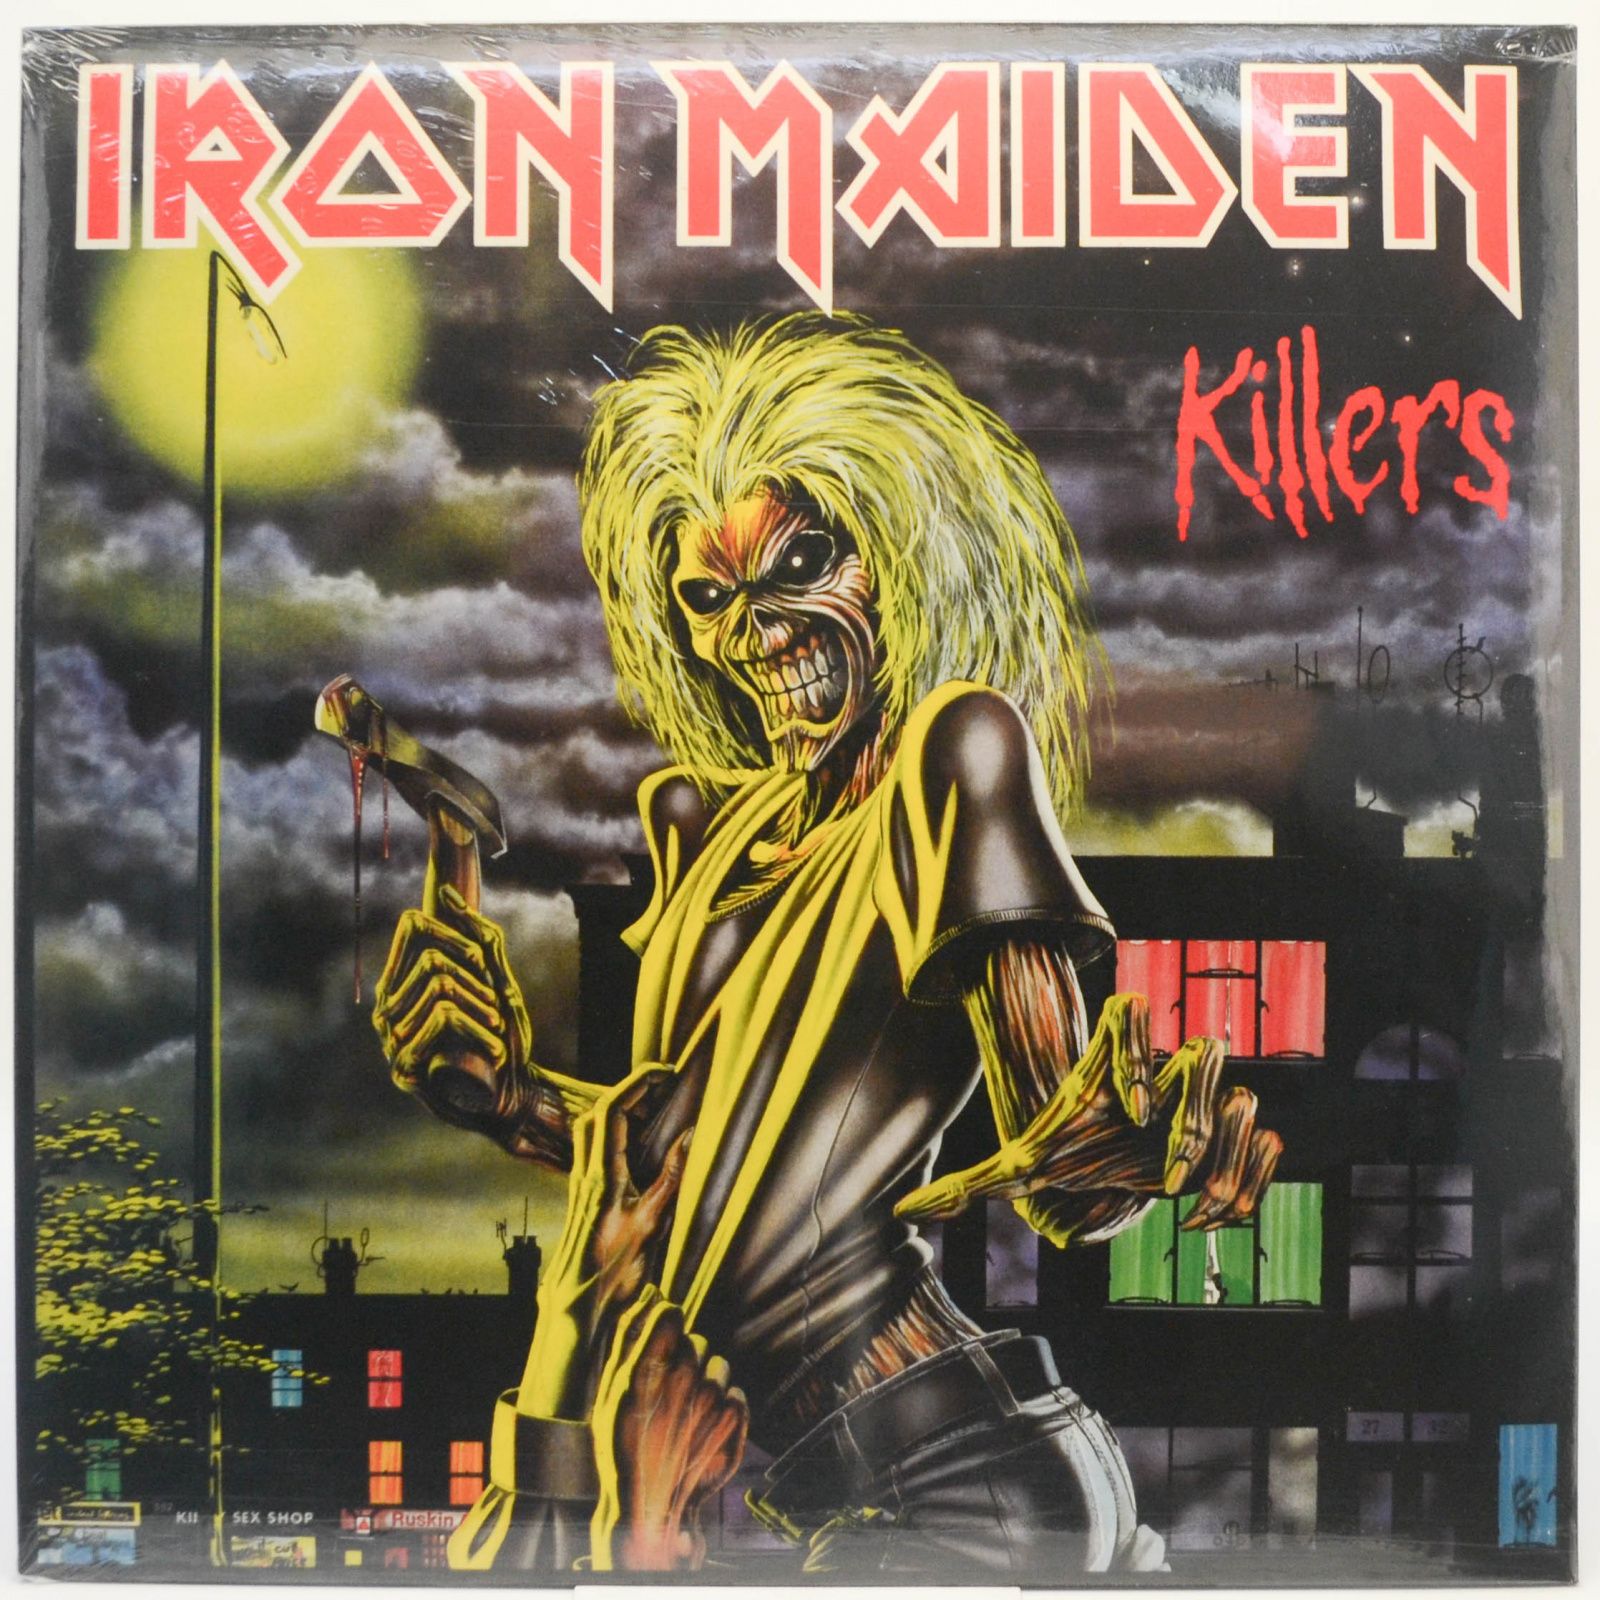 Killers, 1981